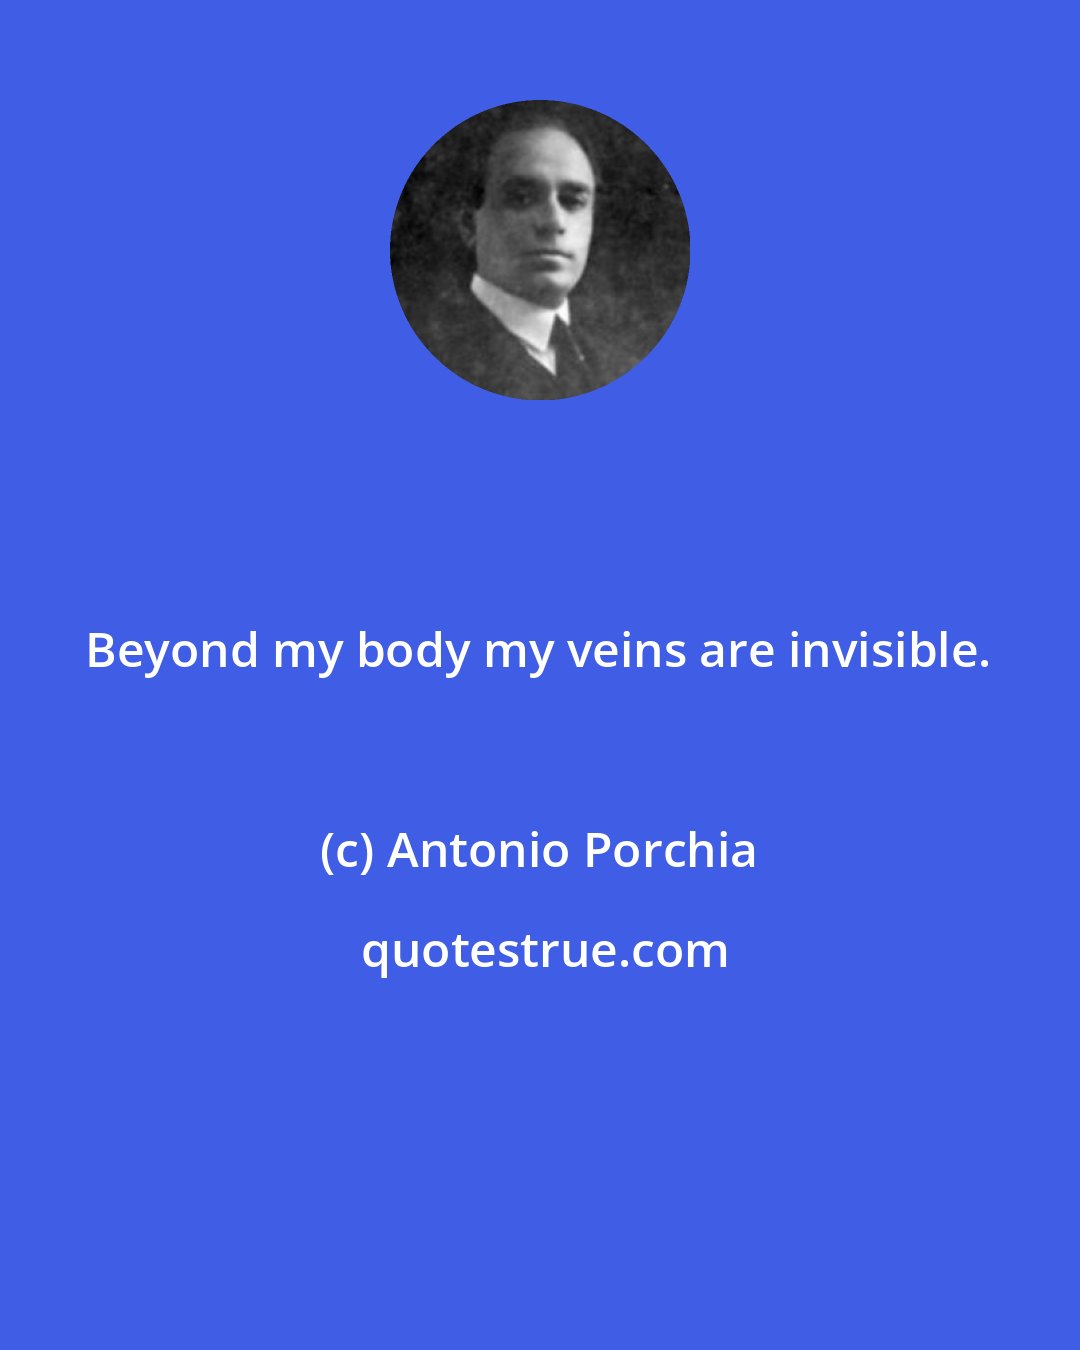 Antonio Porchia: Beyond my body my veins are invisible.